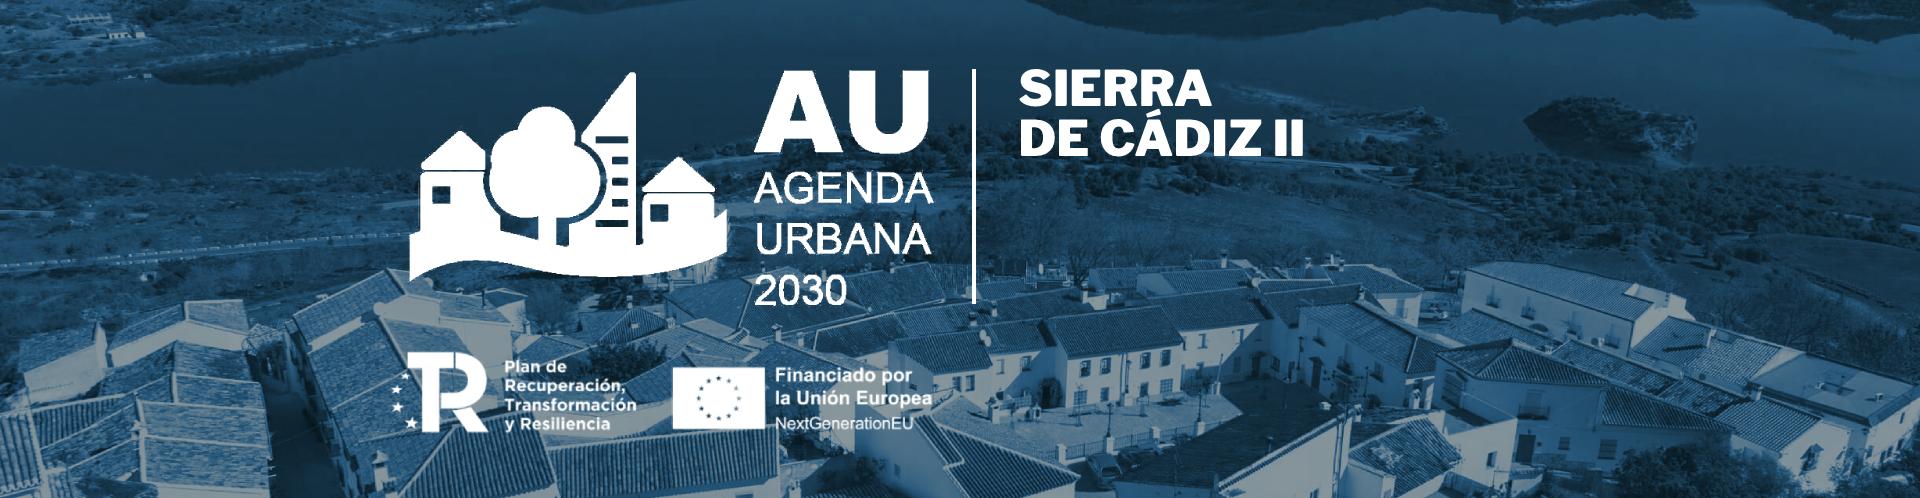 Agenda Urbana 2030 Sierra de Cádiz II